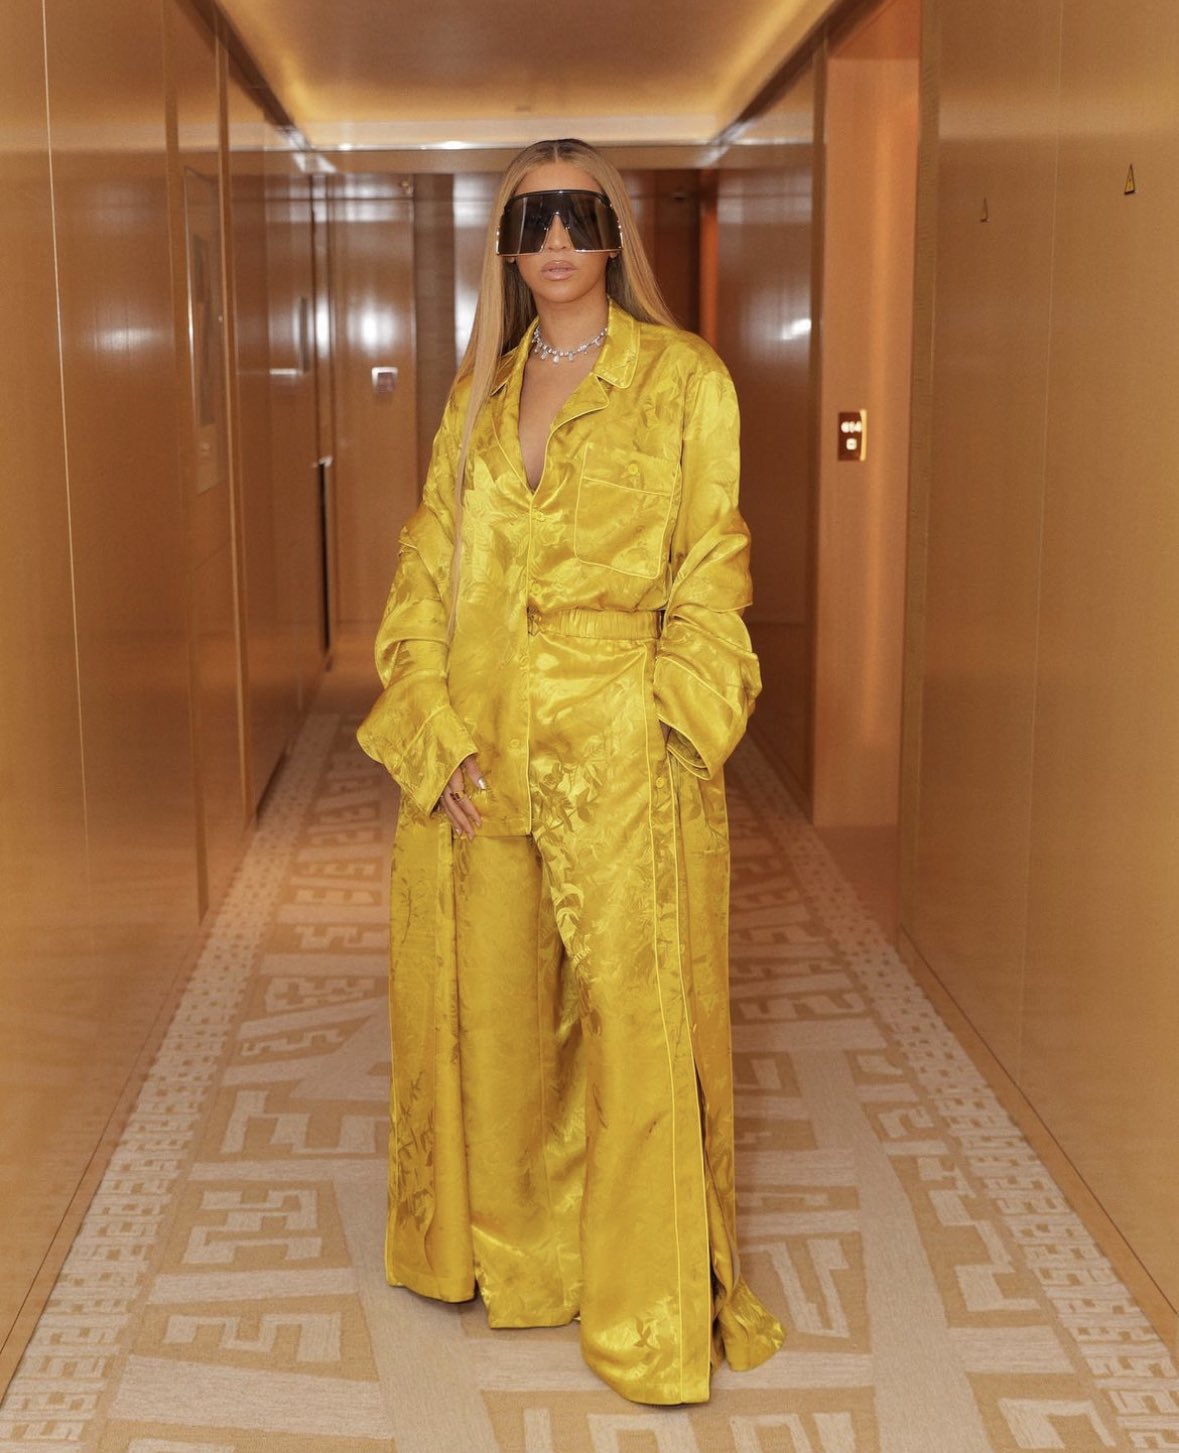 Beyoncé Pops in Pajamas at Louis Vuitton Menswear Show, Spring